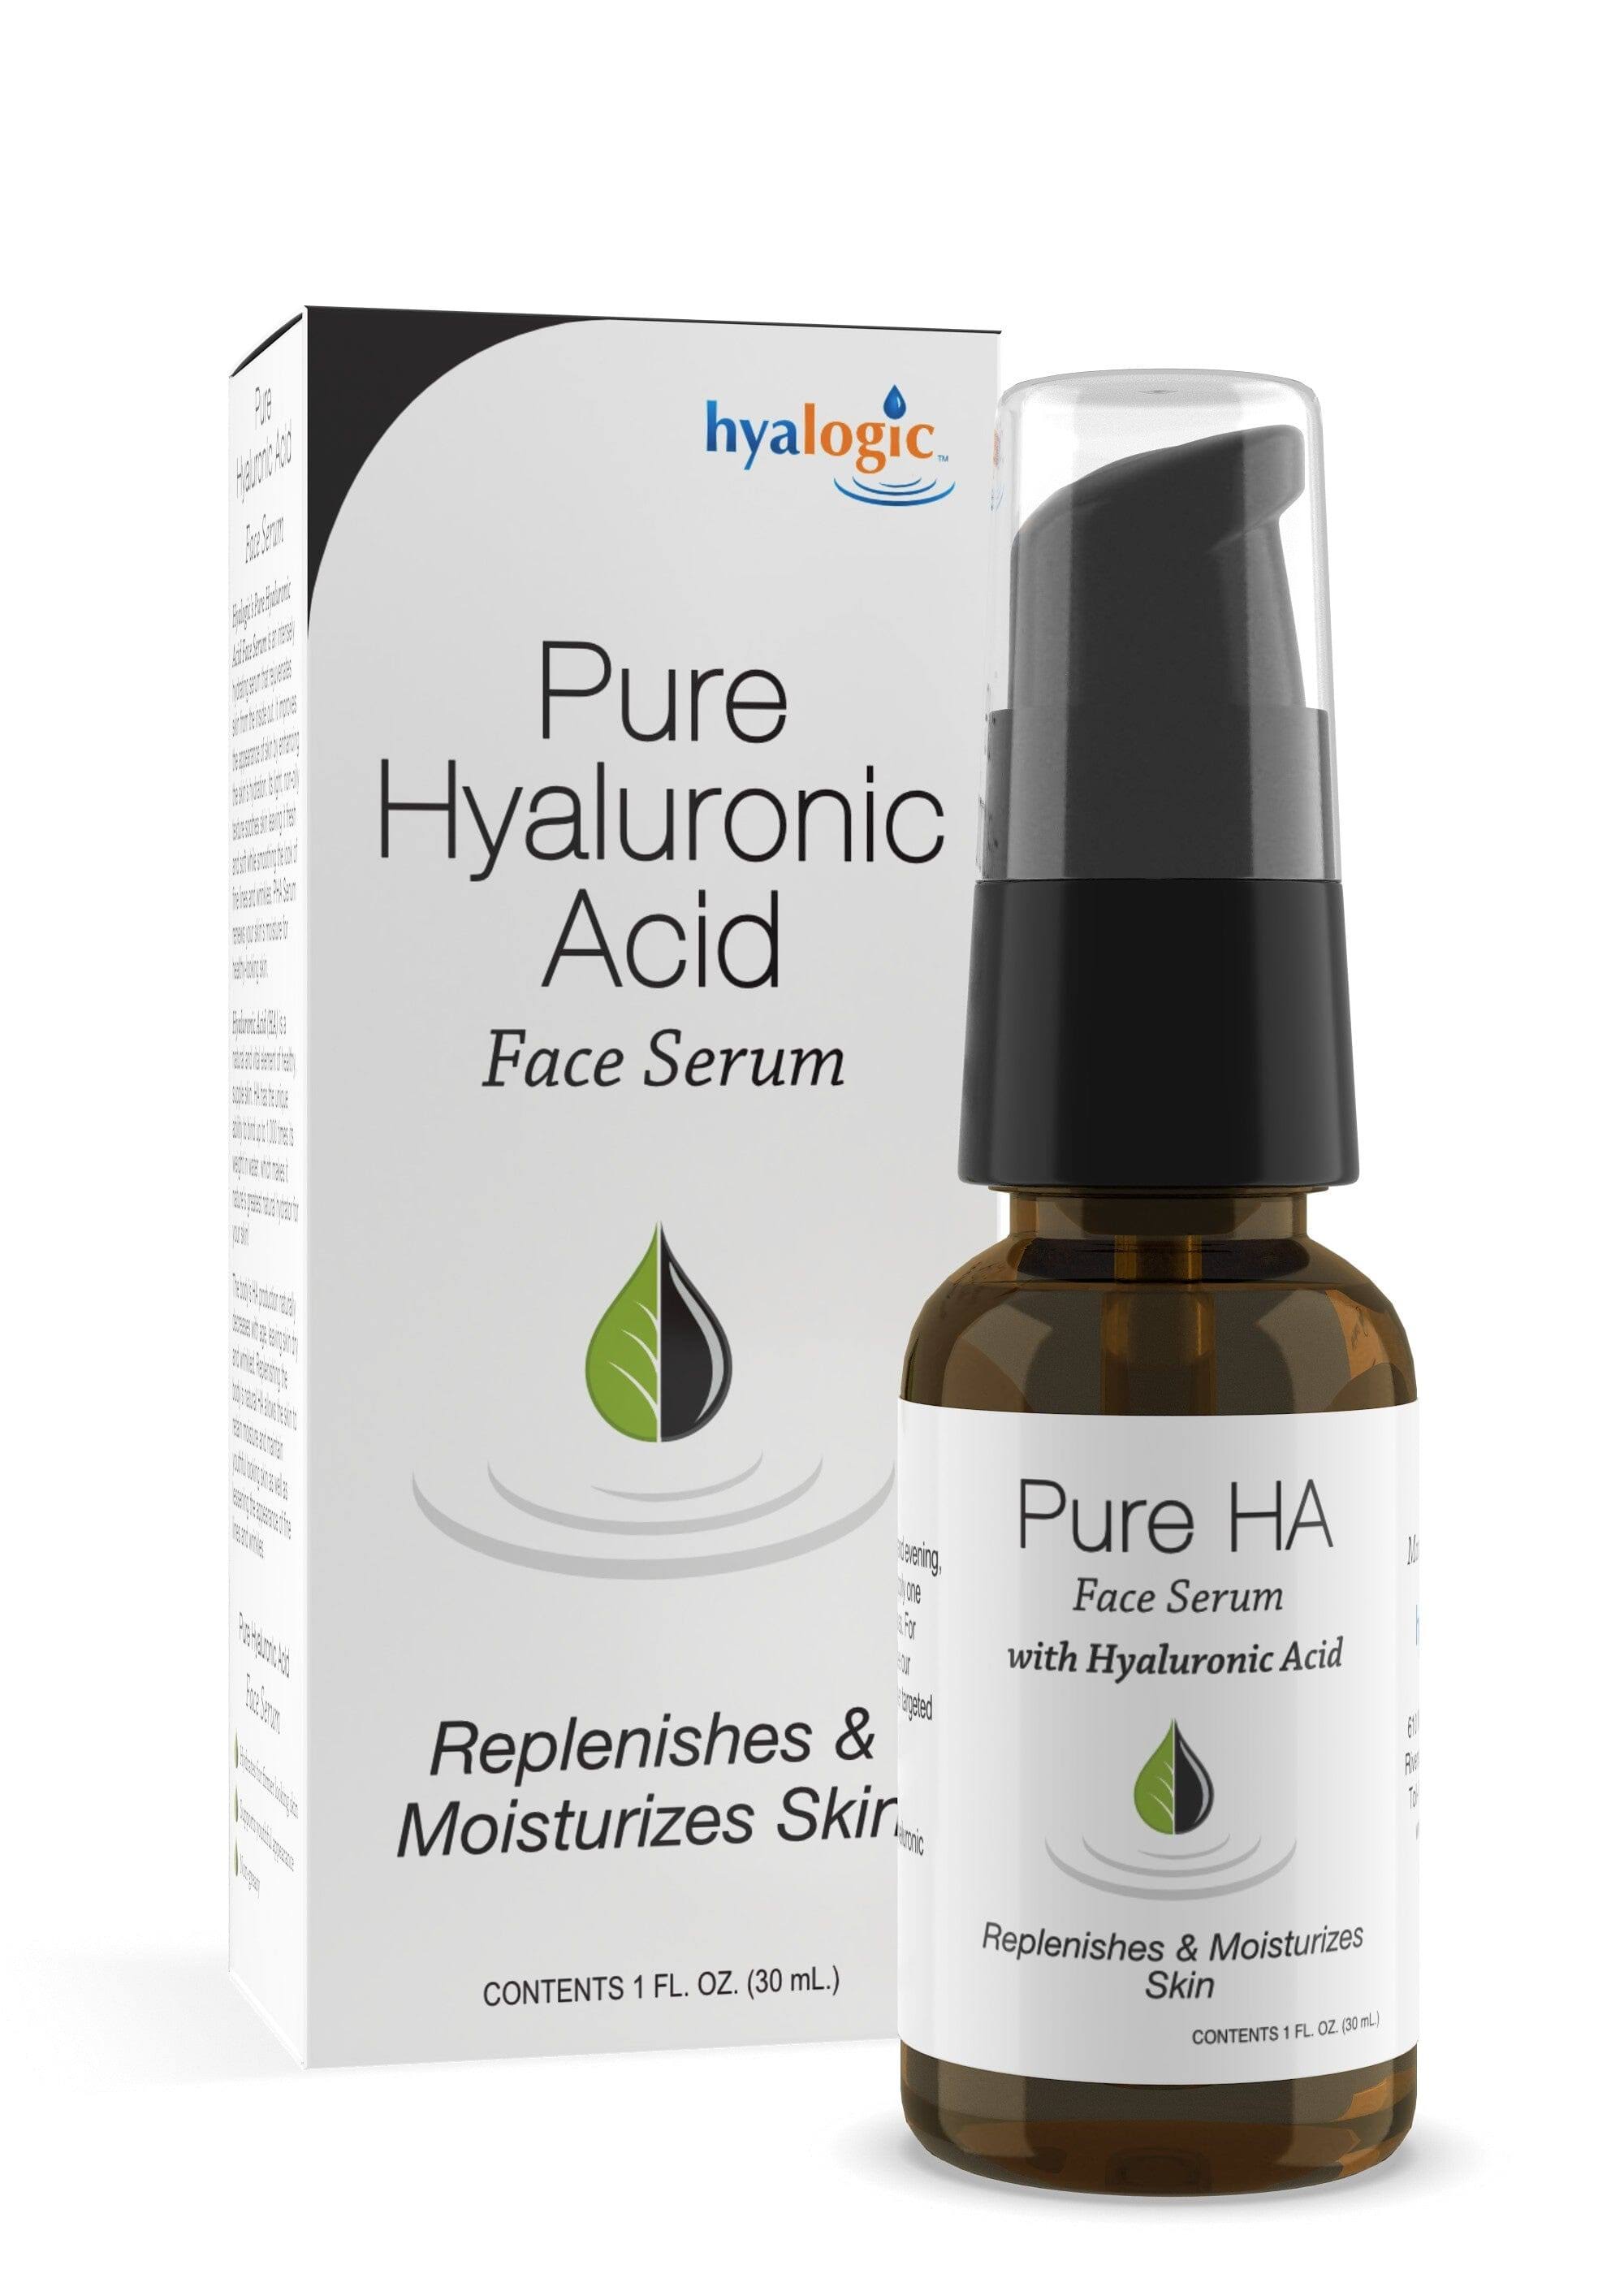 Hyalogic Episilk Pure Ha Hyaluronic Acid Face Serum 1 Fl oz (30 ml)